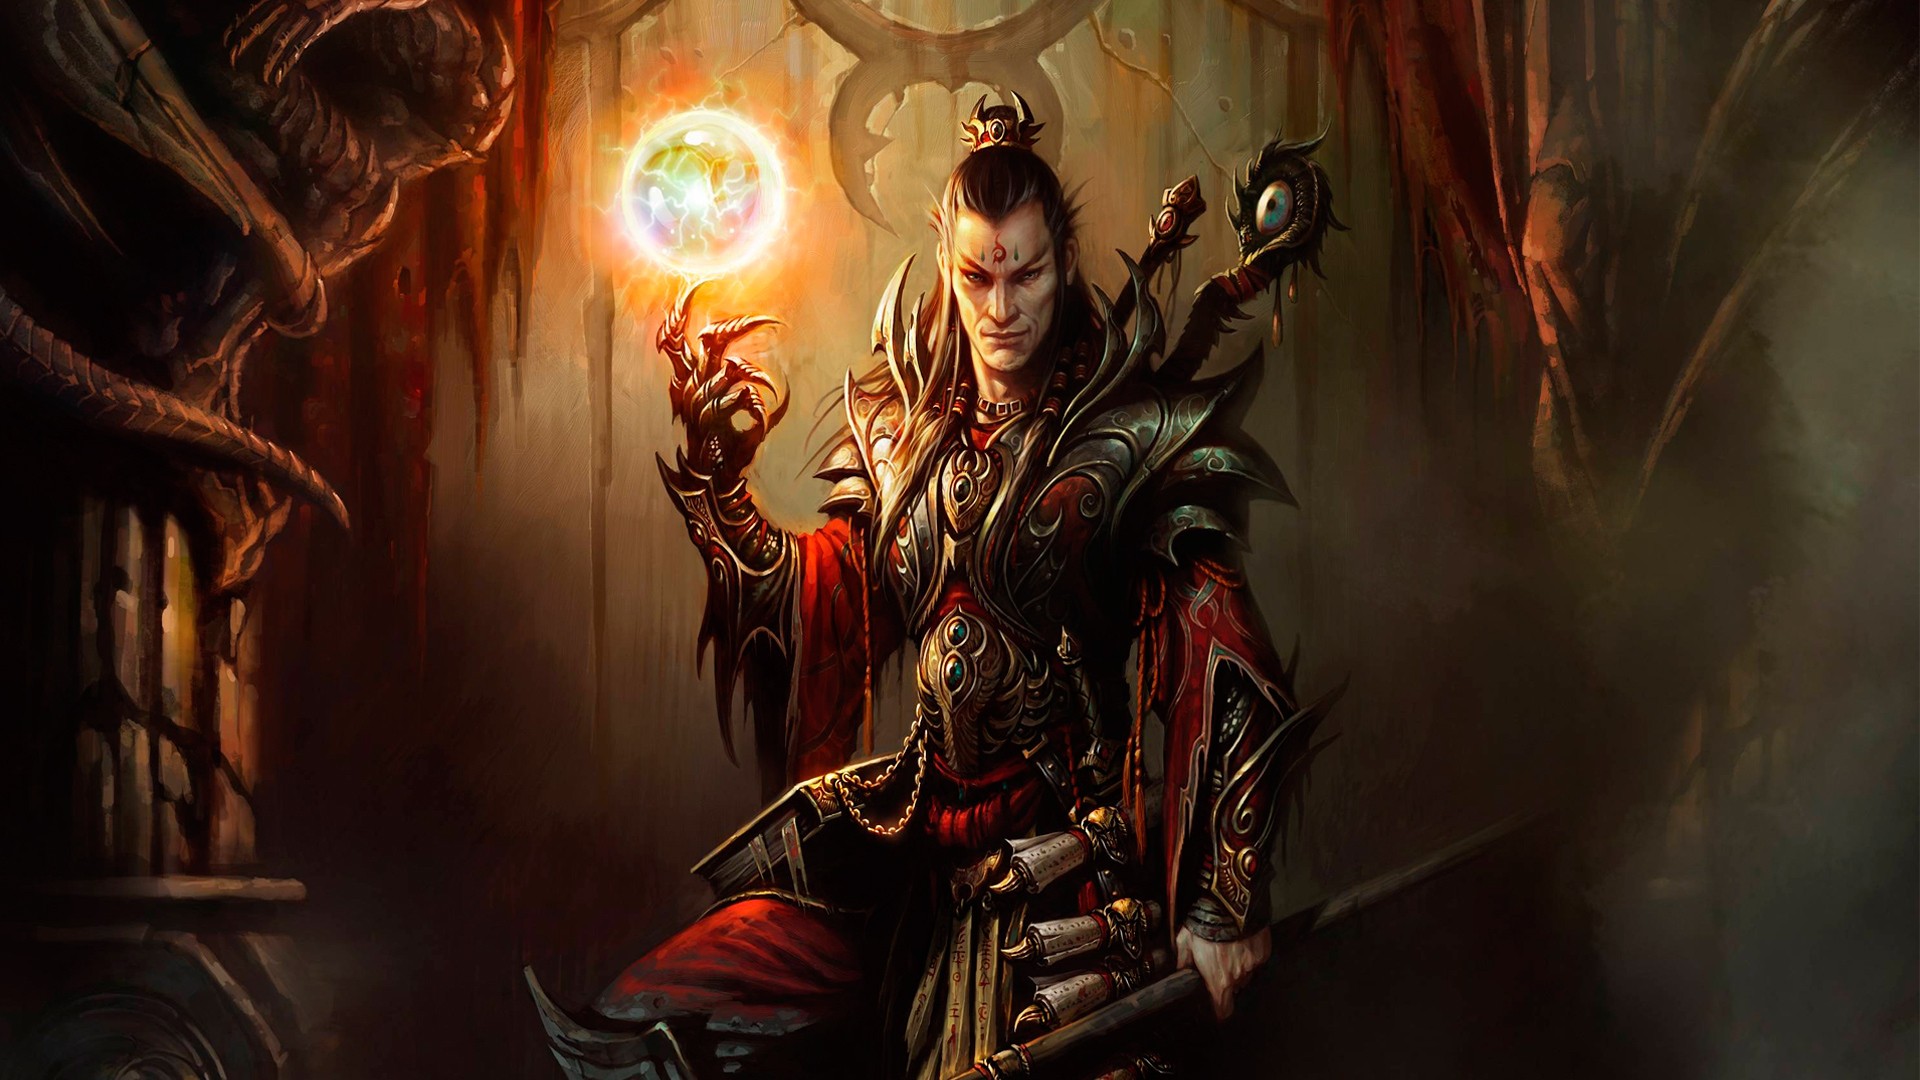 General 1920x1080 Diablo III video games fantasy art digital art video game men fantasy men PC gaming magic fantasy armor video game art